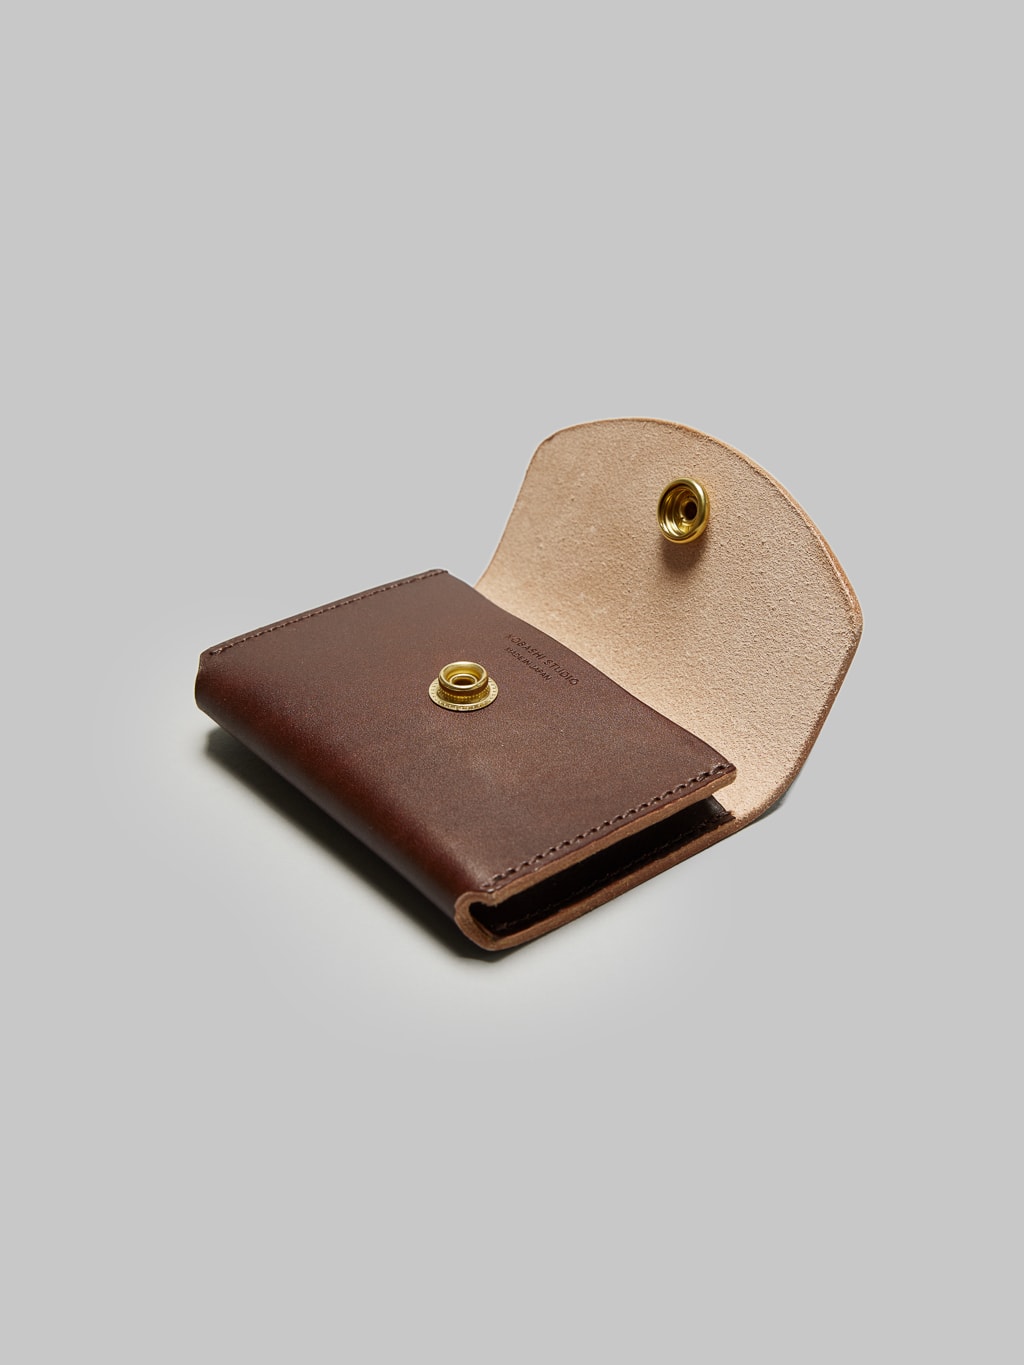 Kobashi Studio Leather Card Case brown hand polished finish